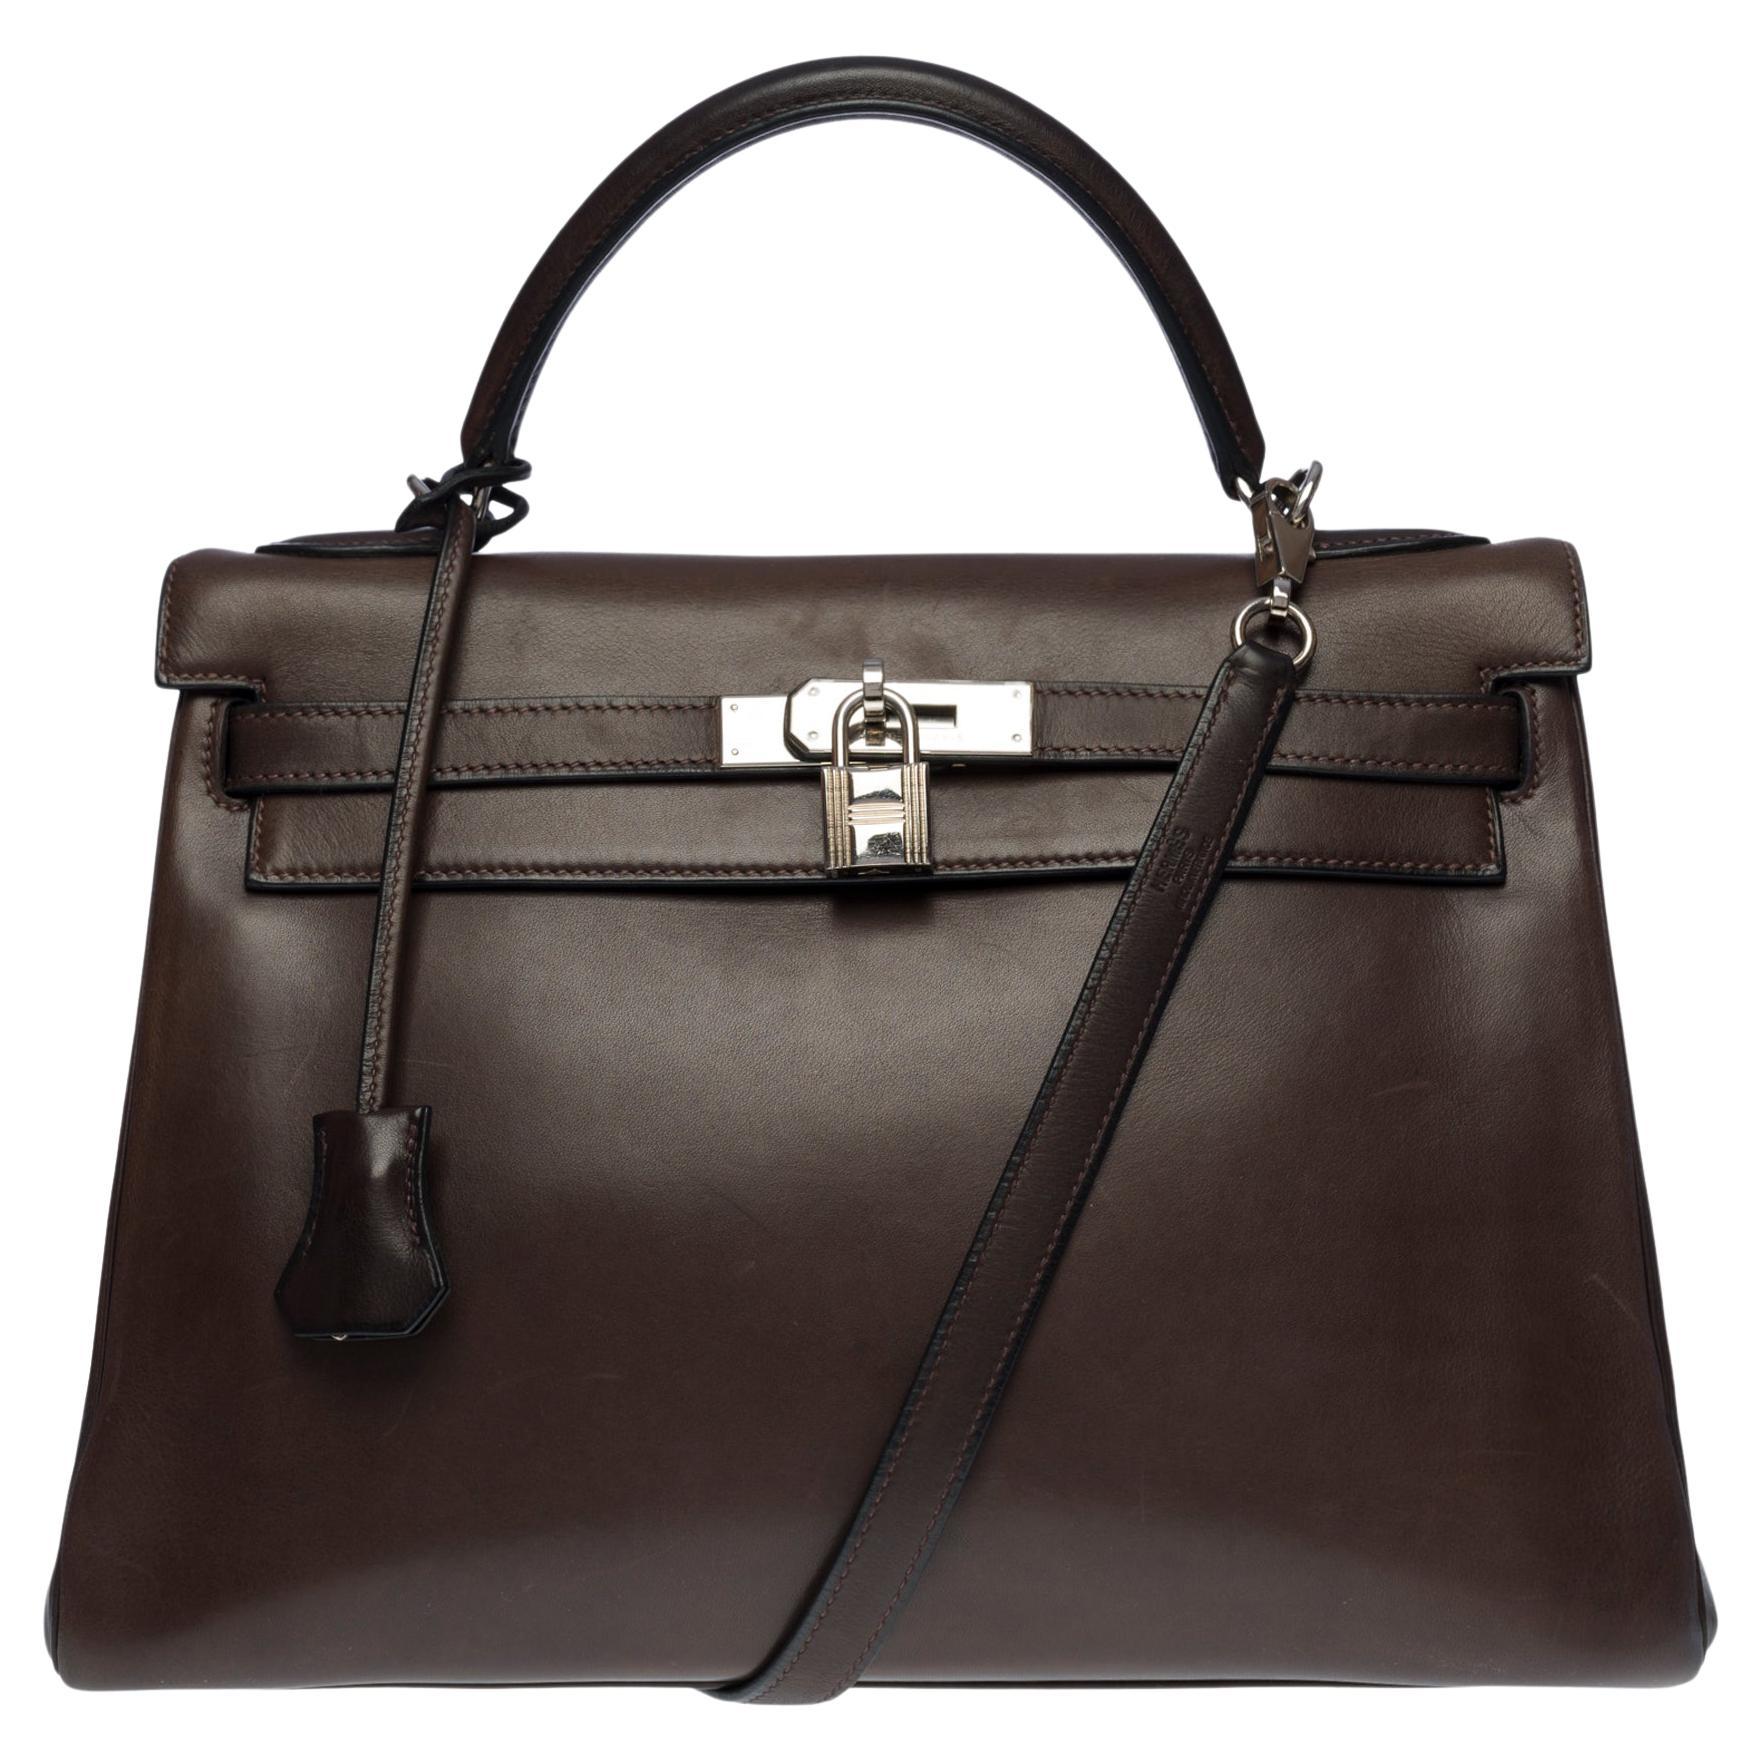 Rare Hermès Kelly 32 retourne handbag strap in brown Barenia leather , SHW